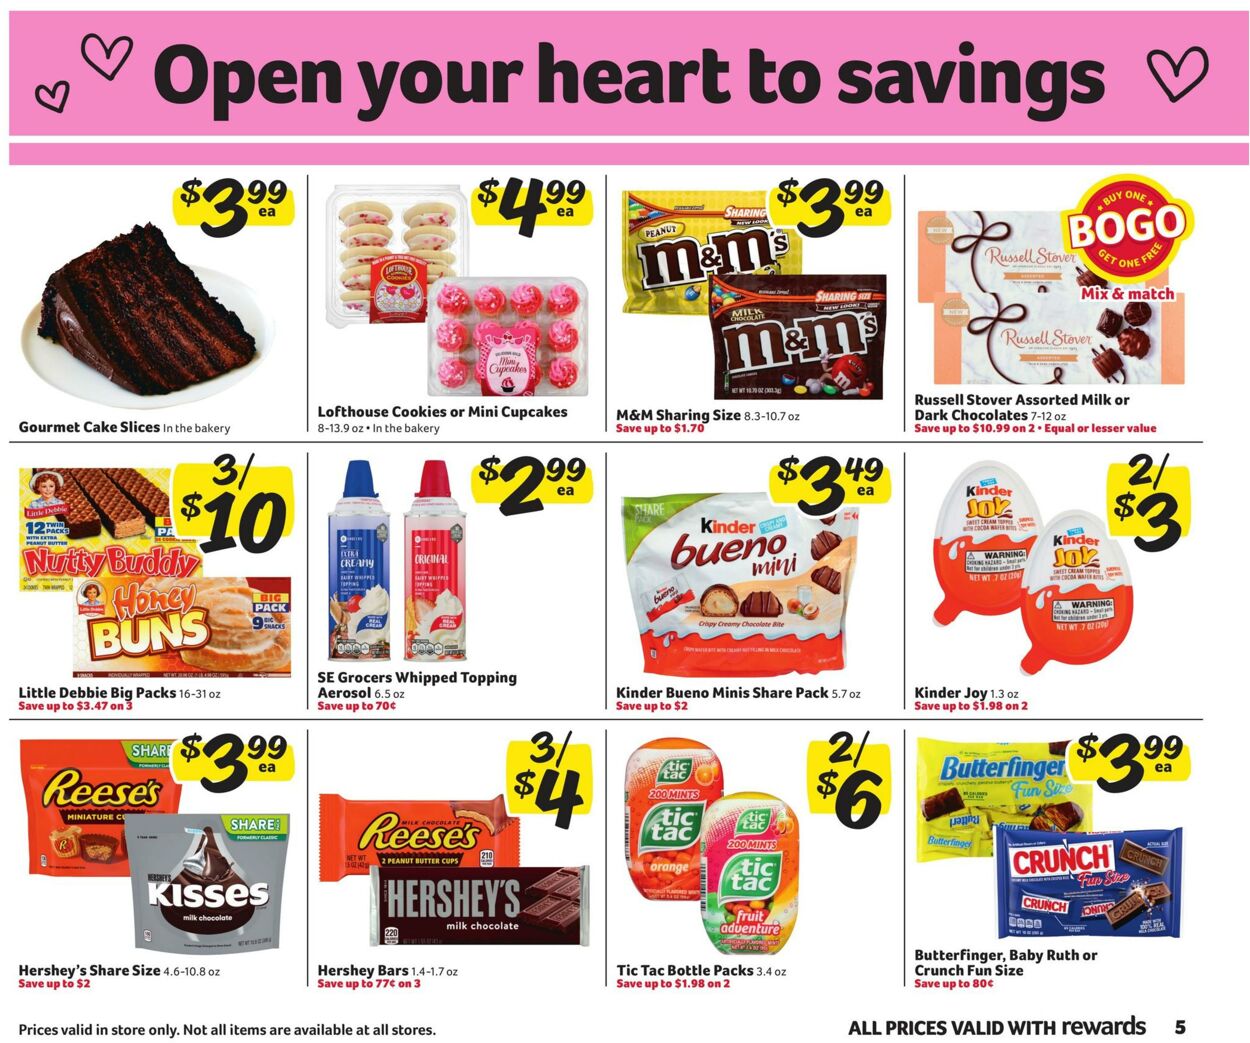 Weekly ad Harvey's Supermarkets 01/25/2023 - 02/14/2023